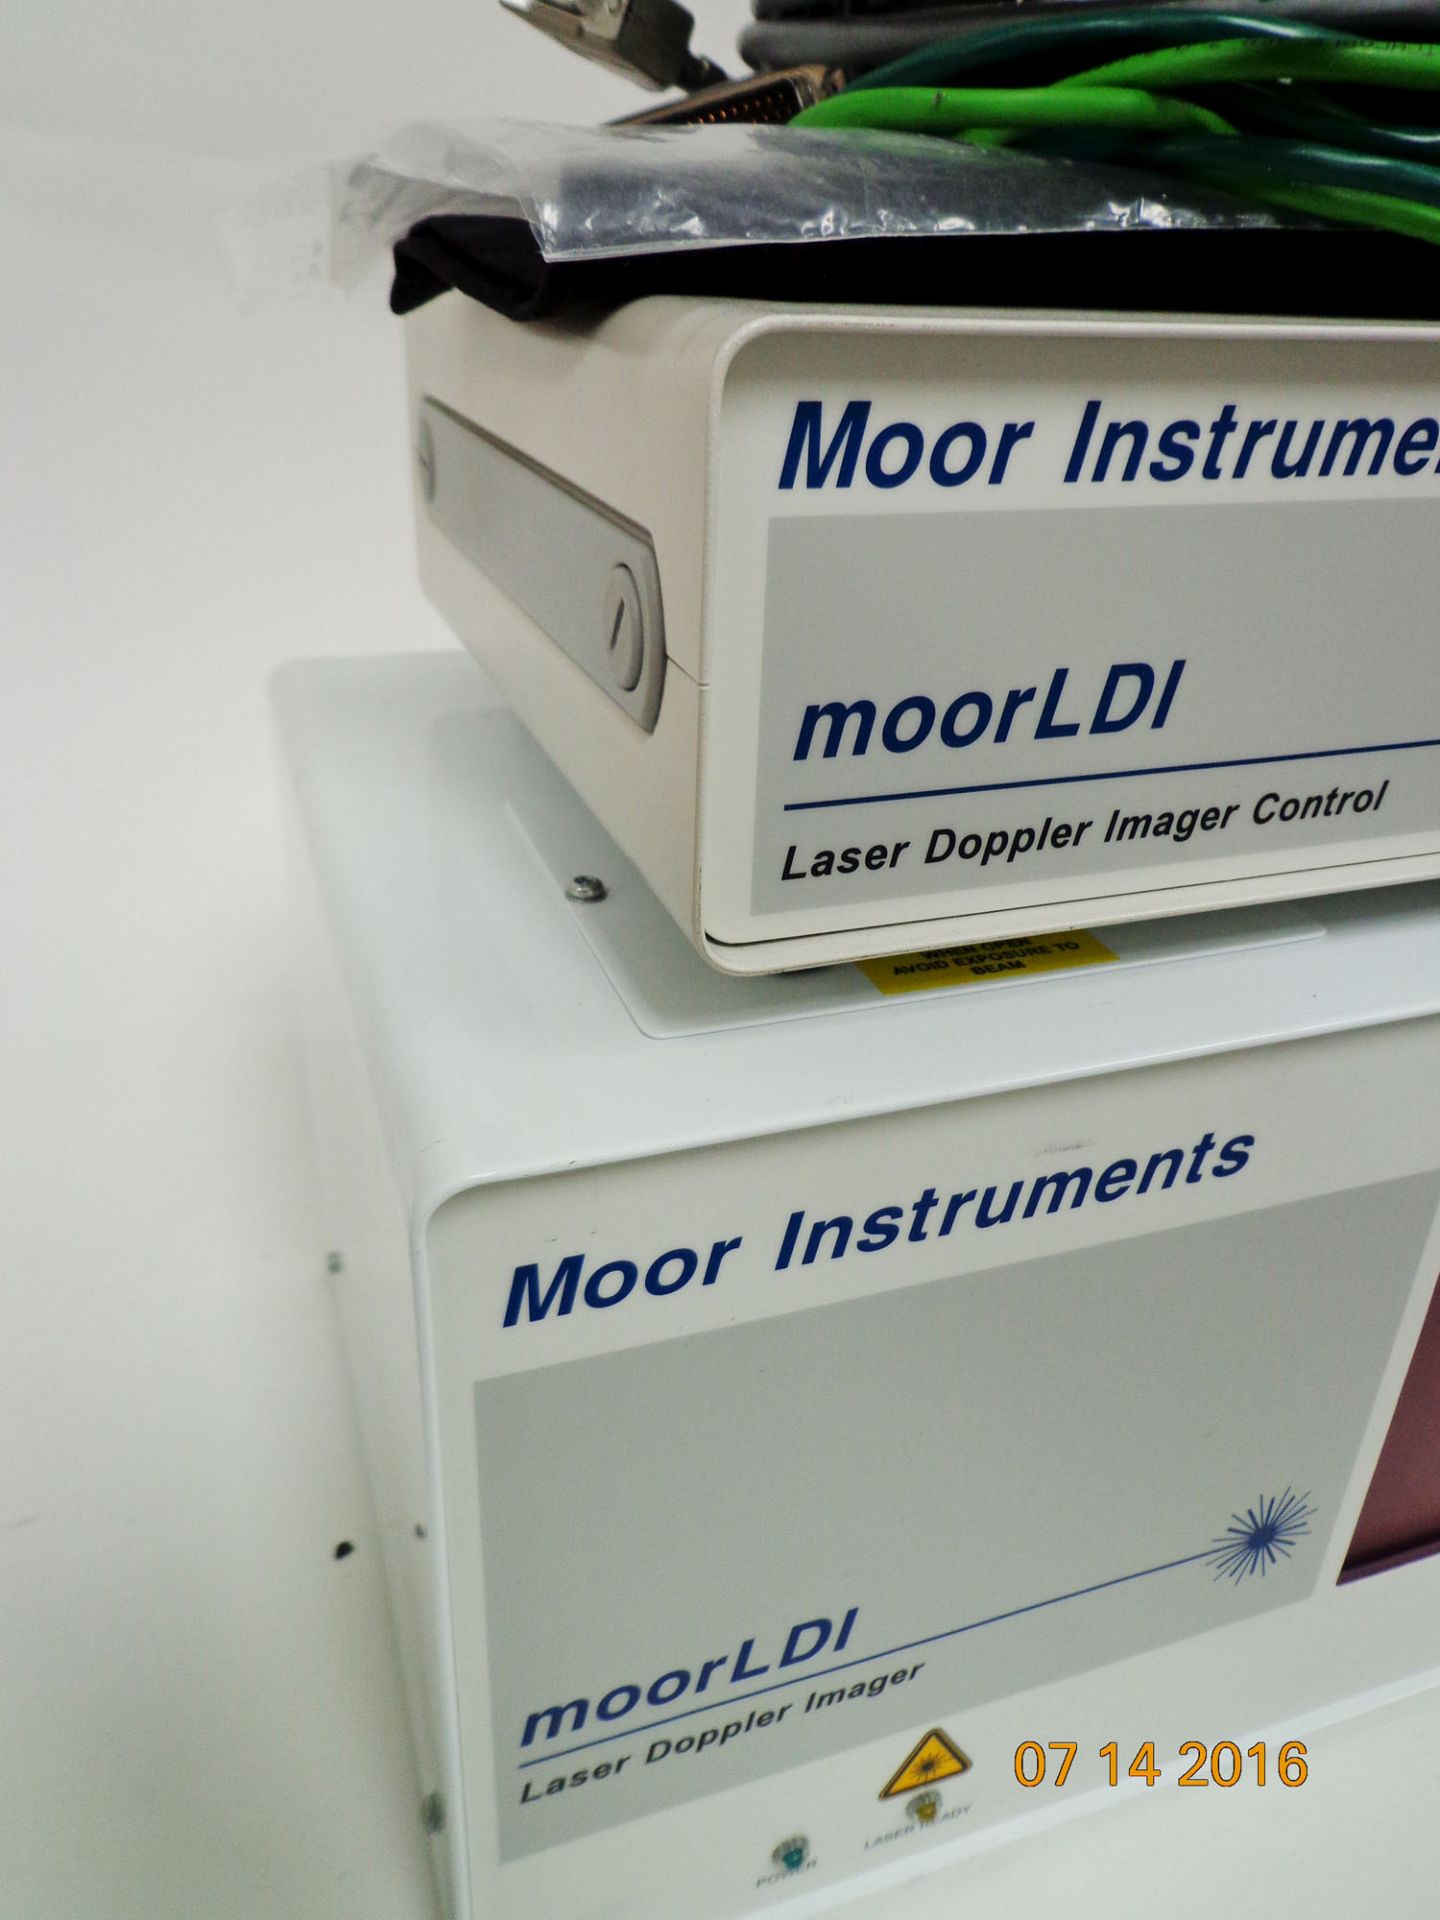 Moor Instruments MoorLDI Laser Doppler Imaging system, S/N CB132 - Image 2 of 4